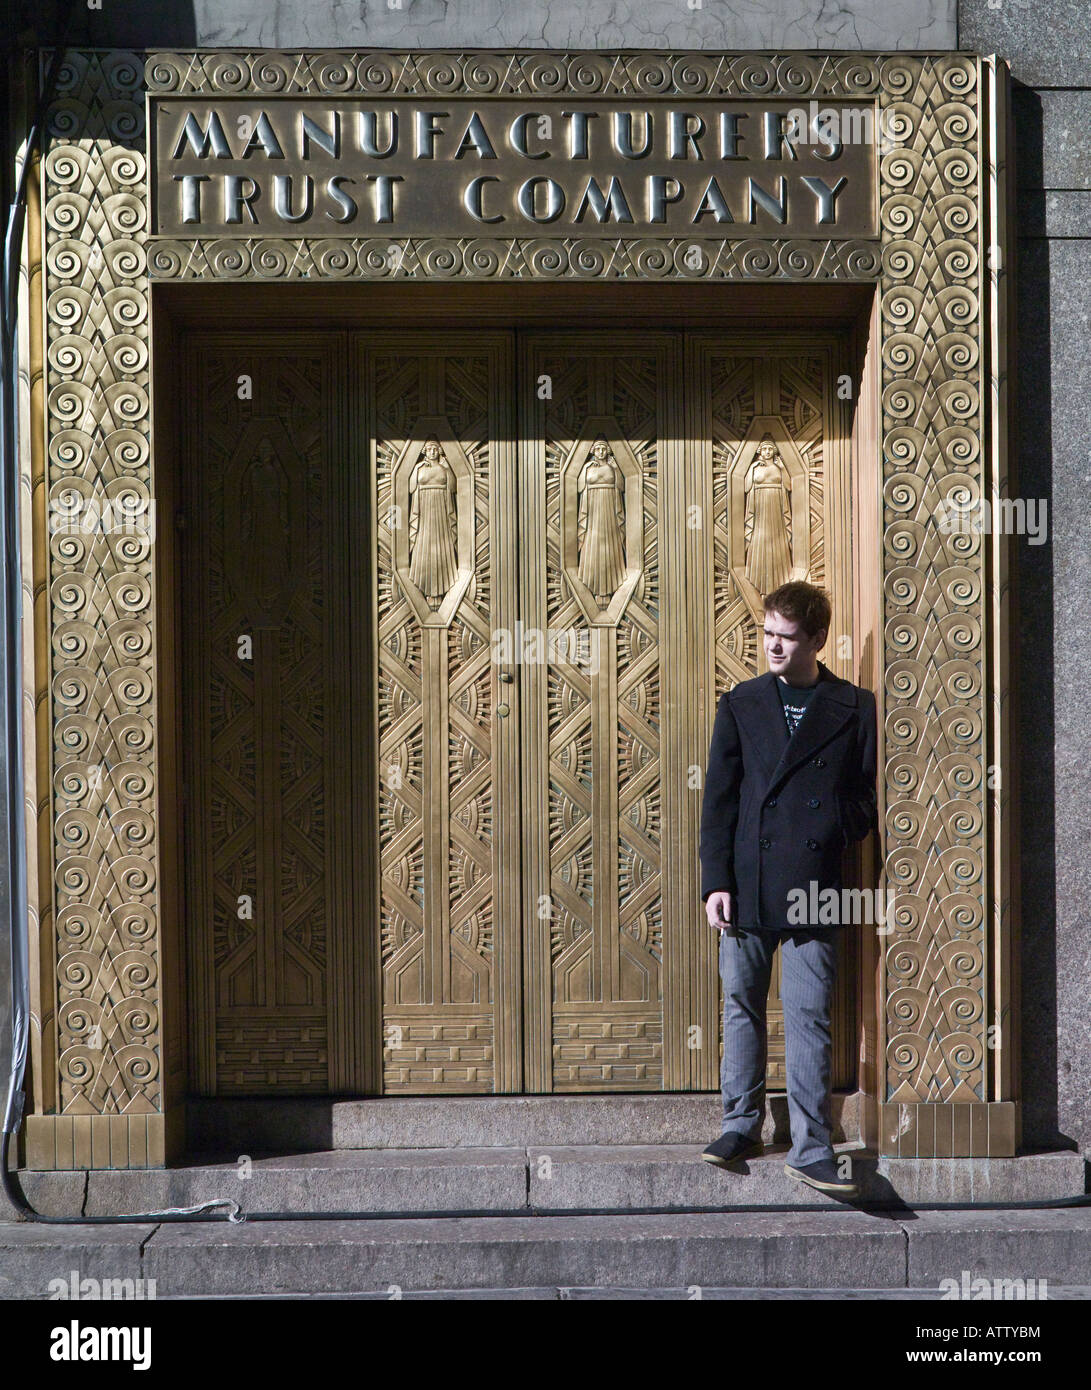 L'homme à porte de fabricants Trust Company signe, ancien New Yorker Hotel, 481 Eighth Avenue, Manhattan, New York, USA Banque D'Images